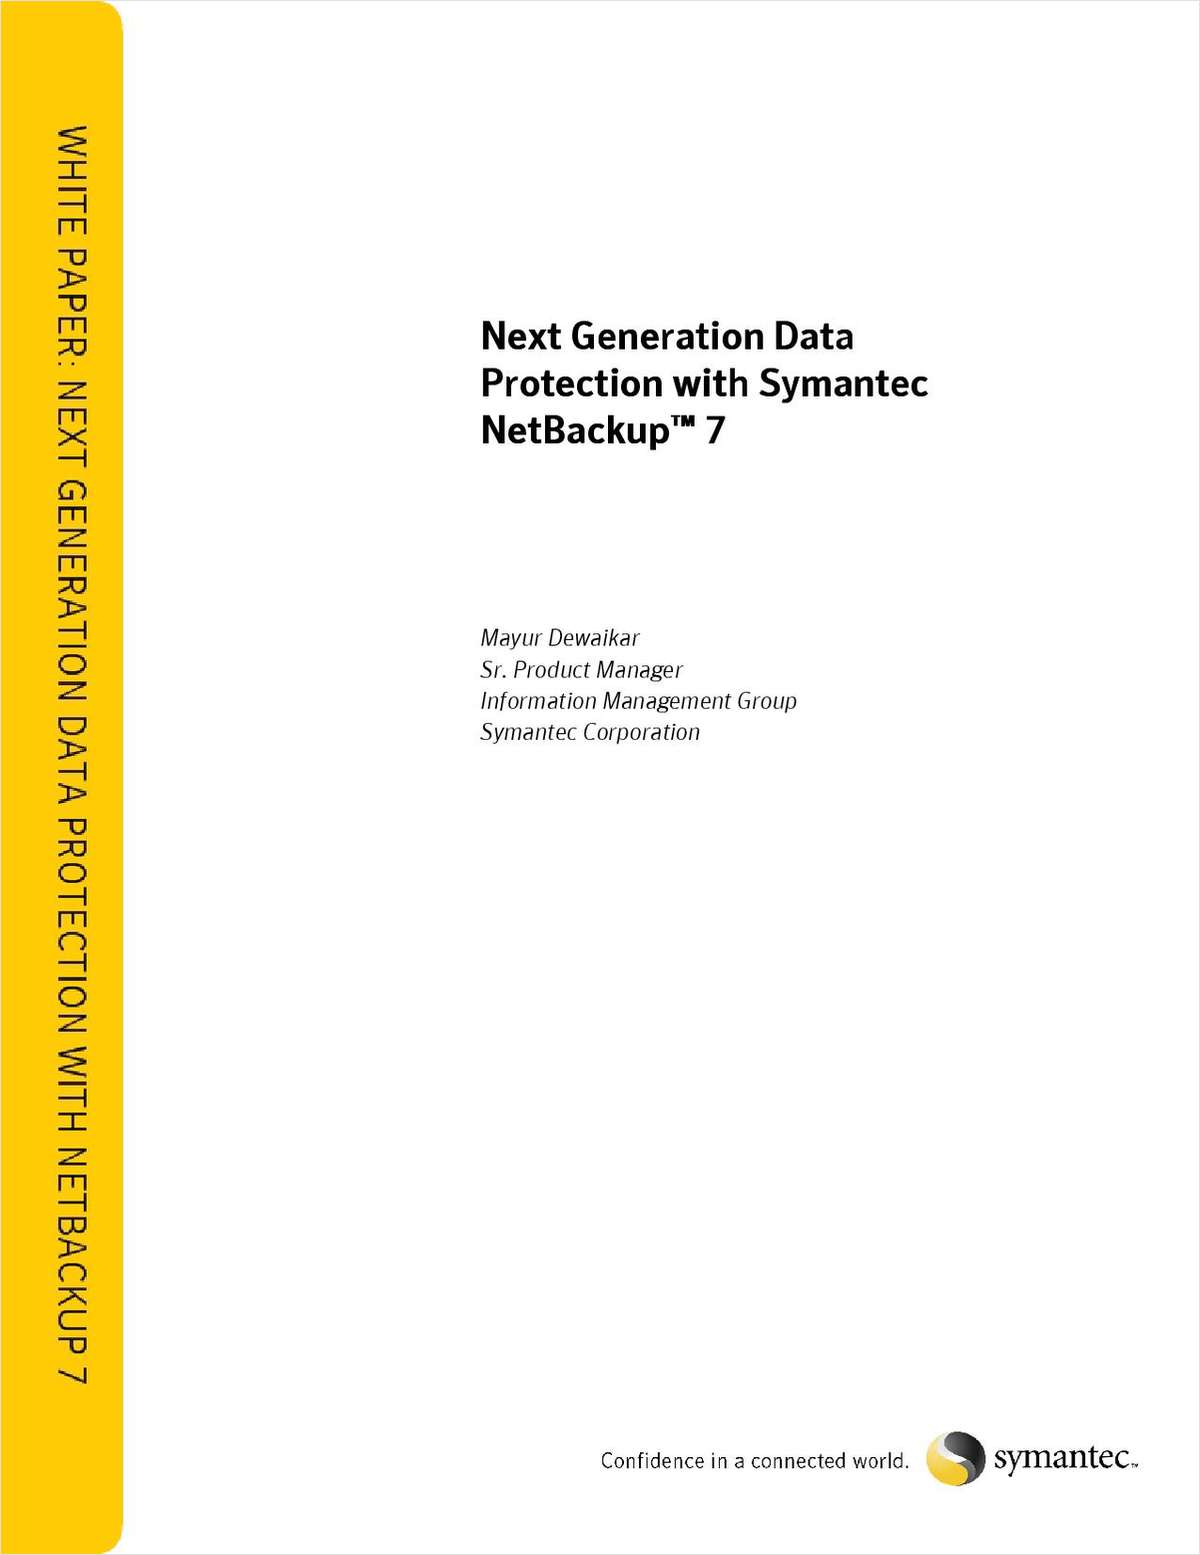 Next Generation Data Protection with Symantec NetBackup™ 7